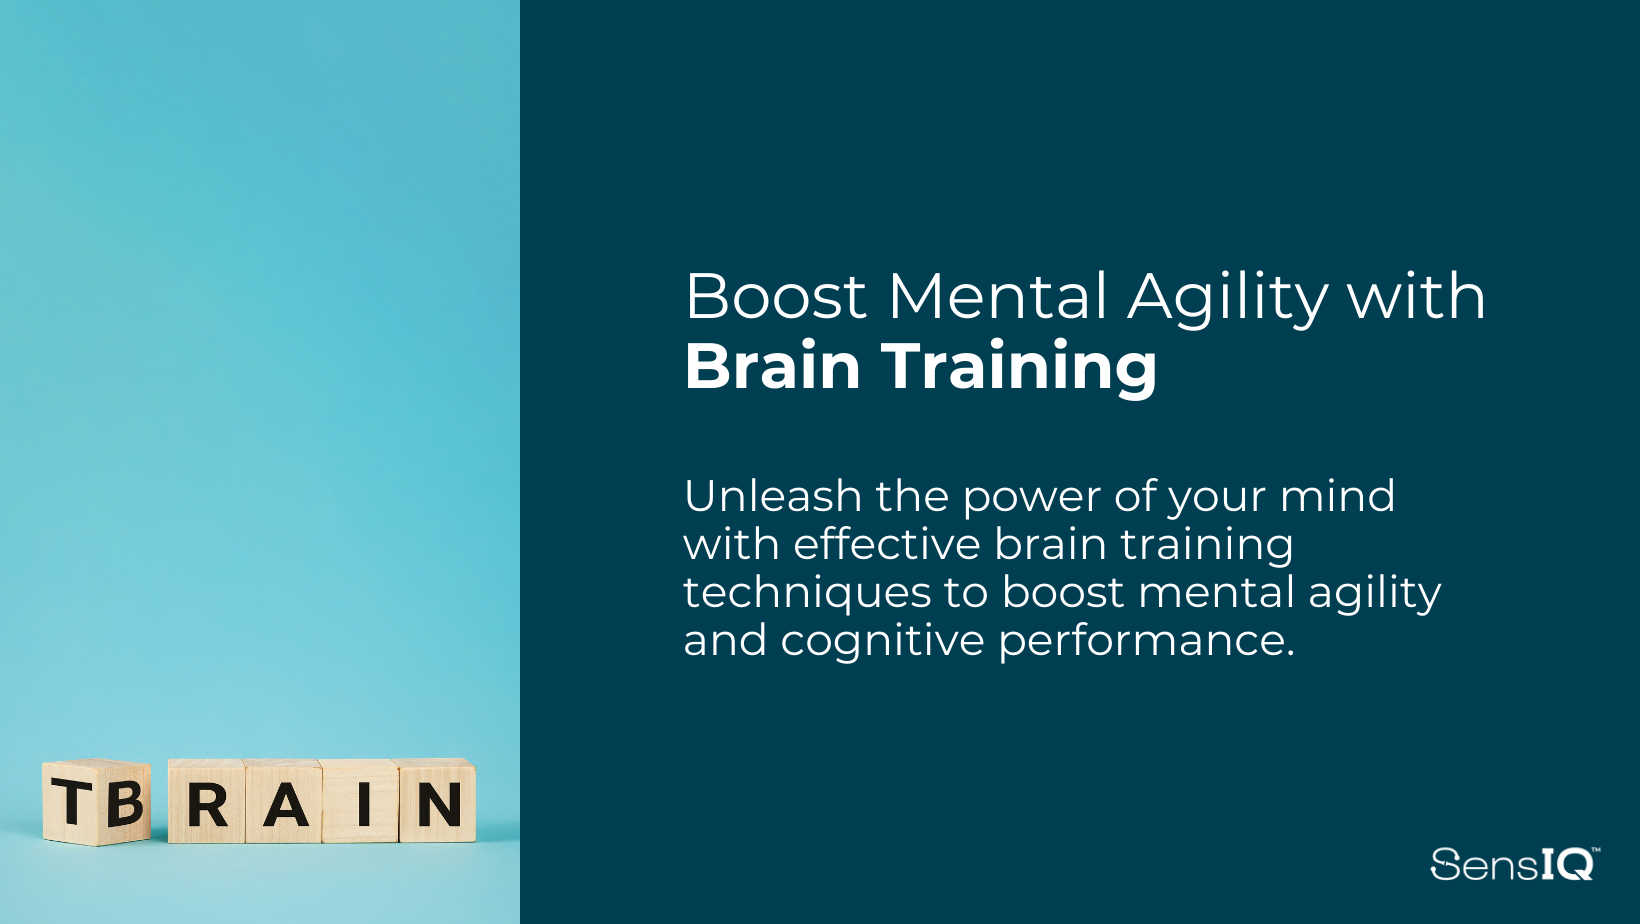 Boost Mental Agility with Brain Training